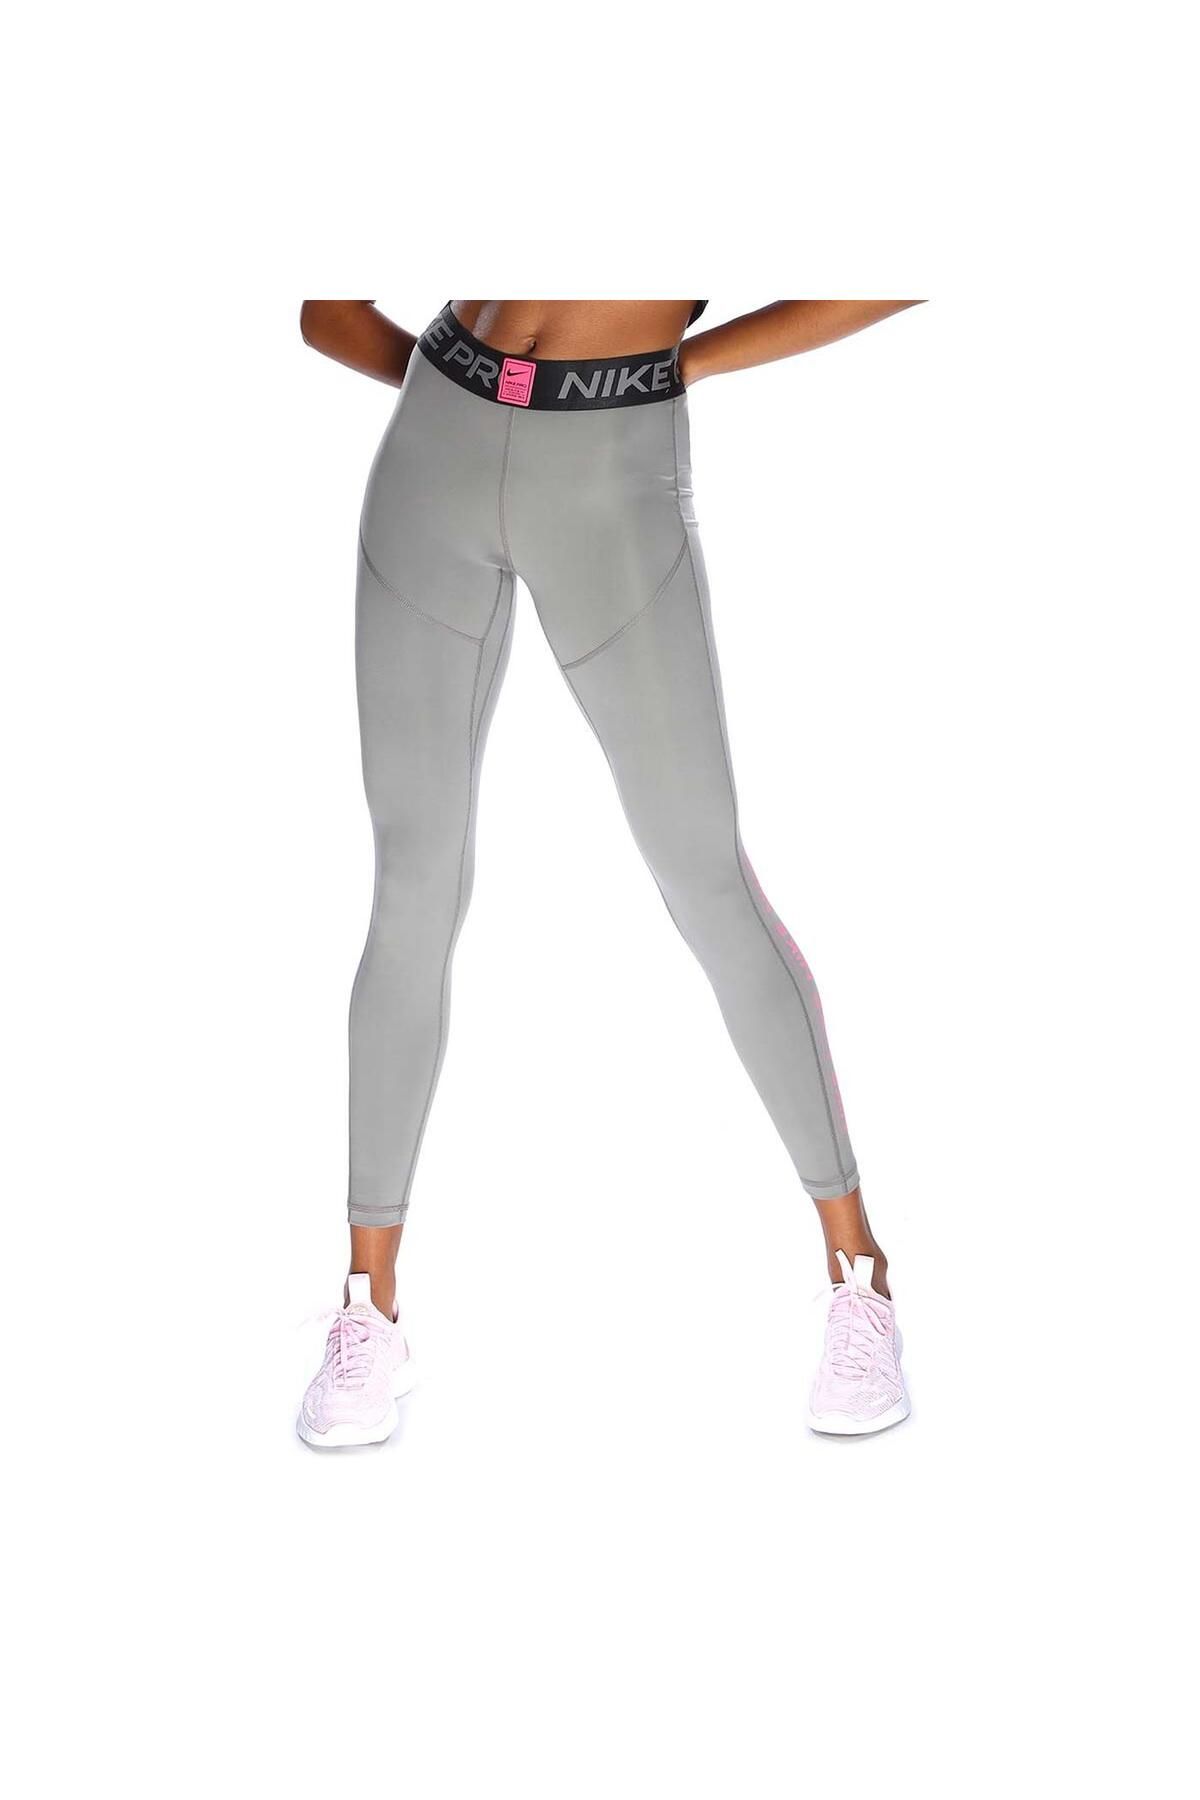 Nike Sports Leggings - Gray - Normal Waist - Trendyol